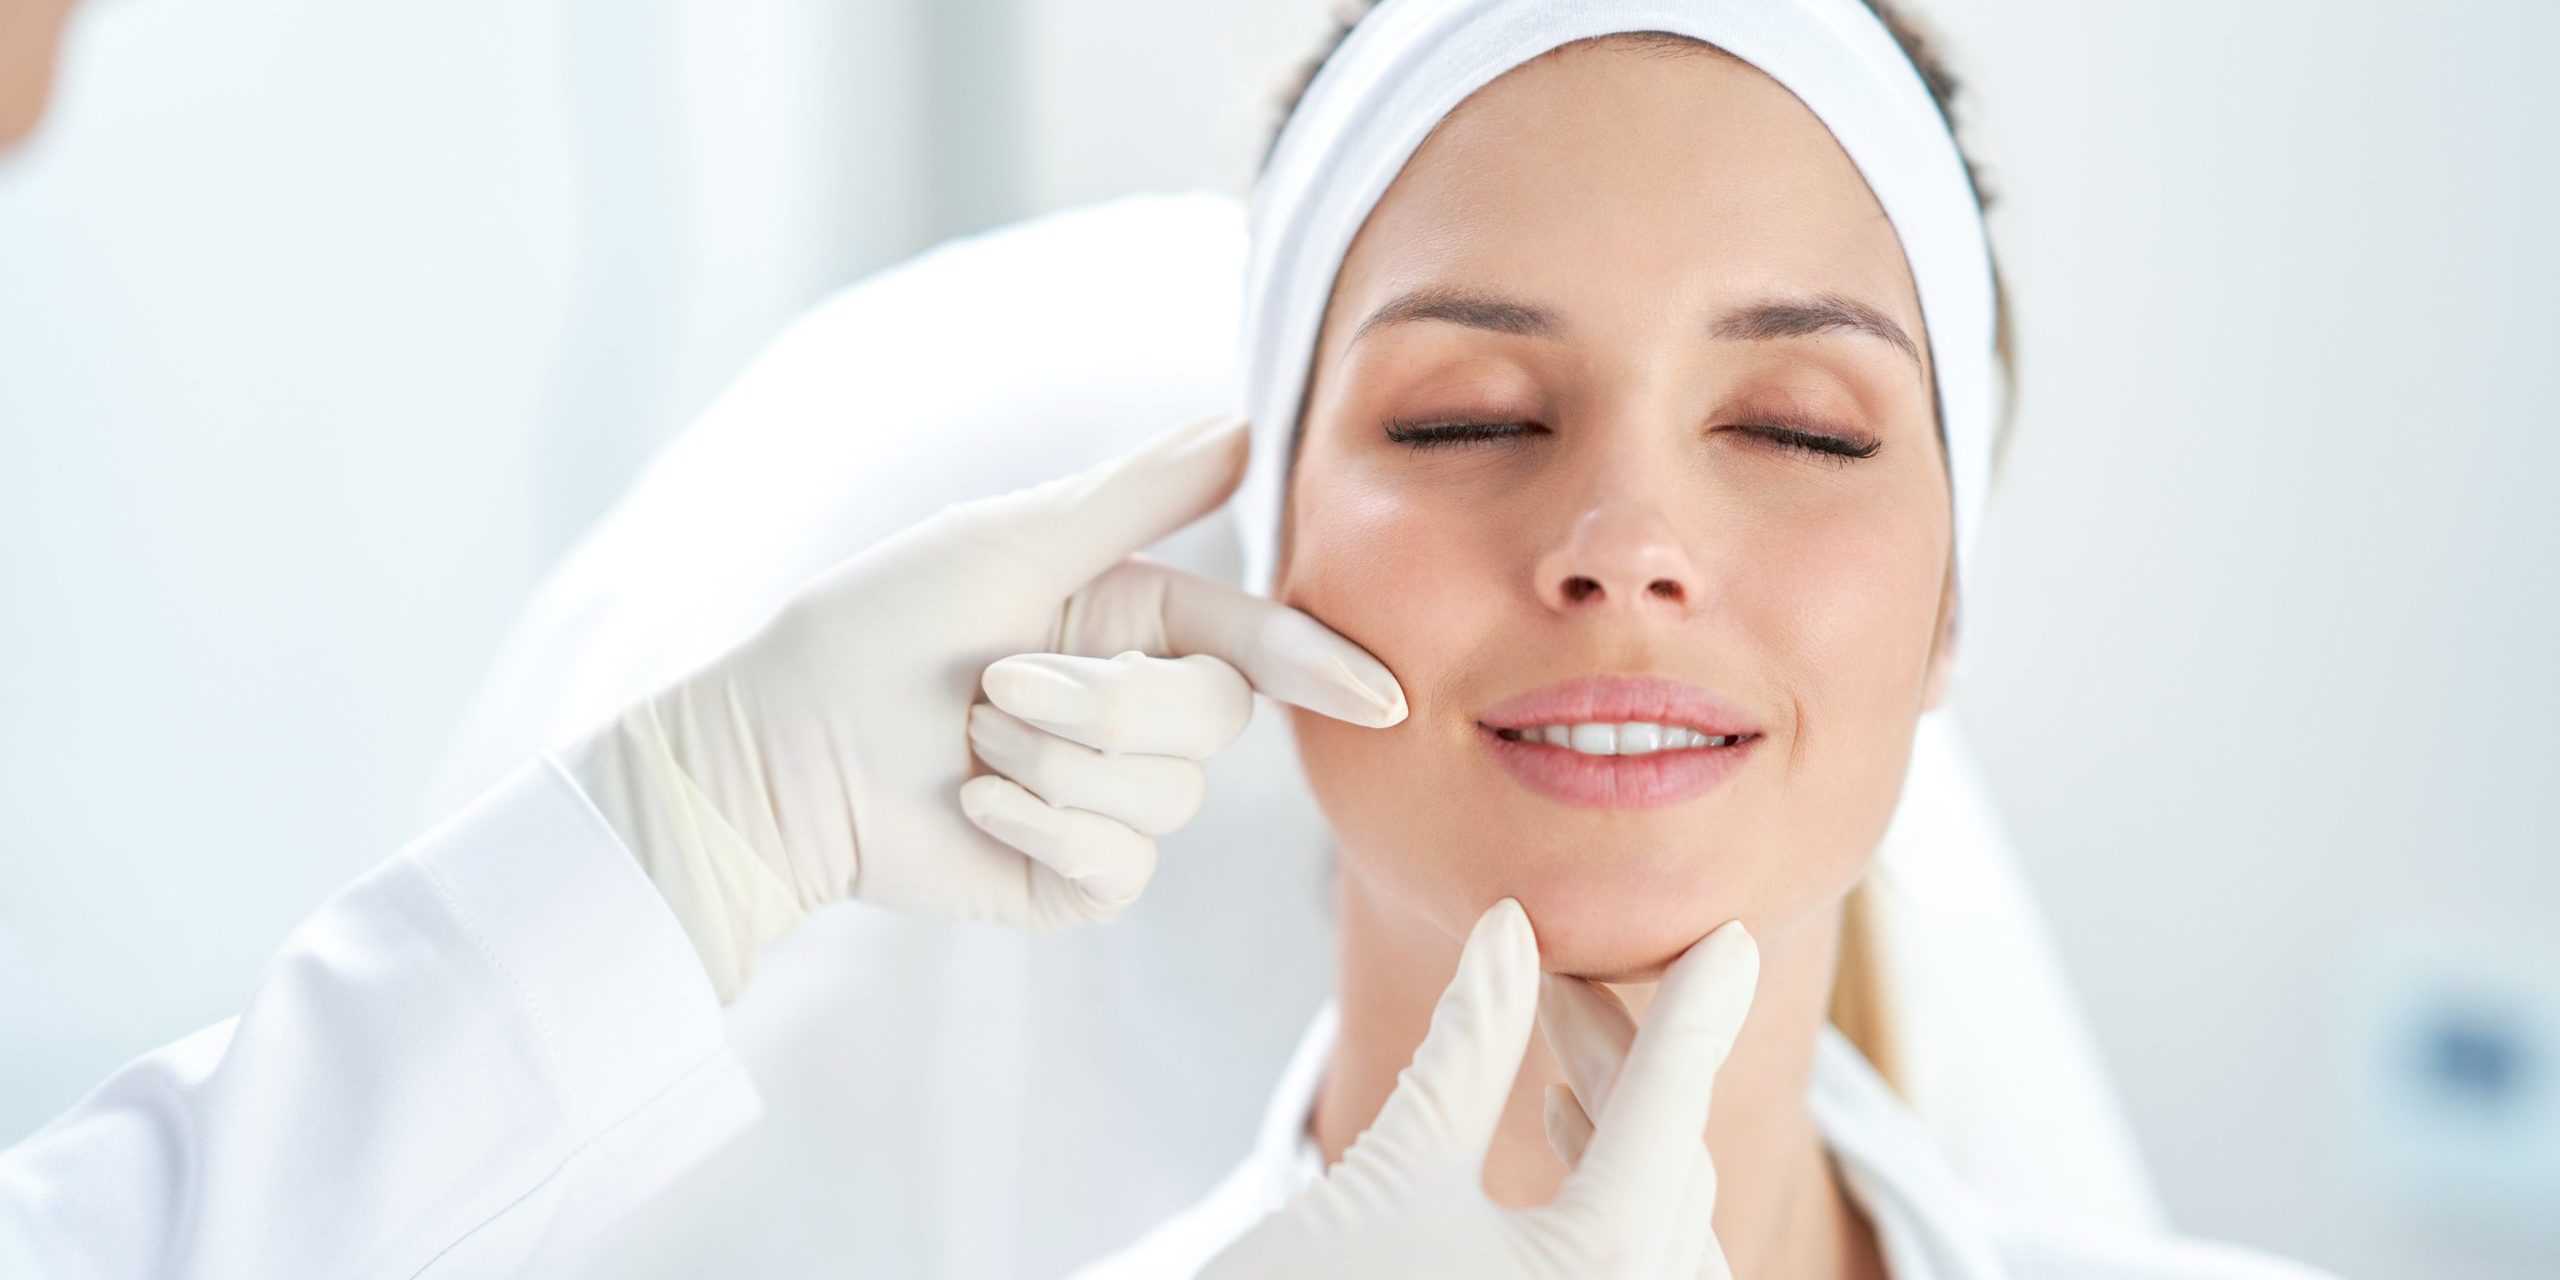 Leading Hydrafacial Provider, Deep Cleansing Facial